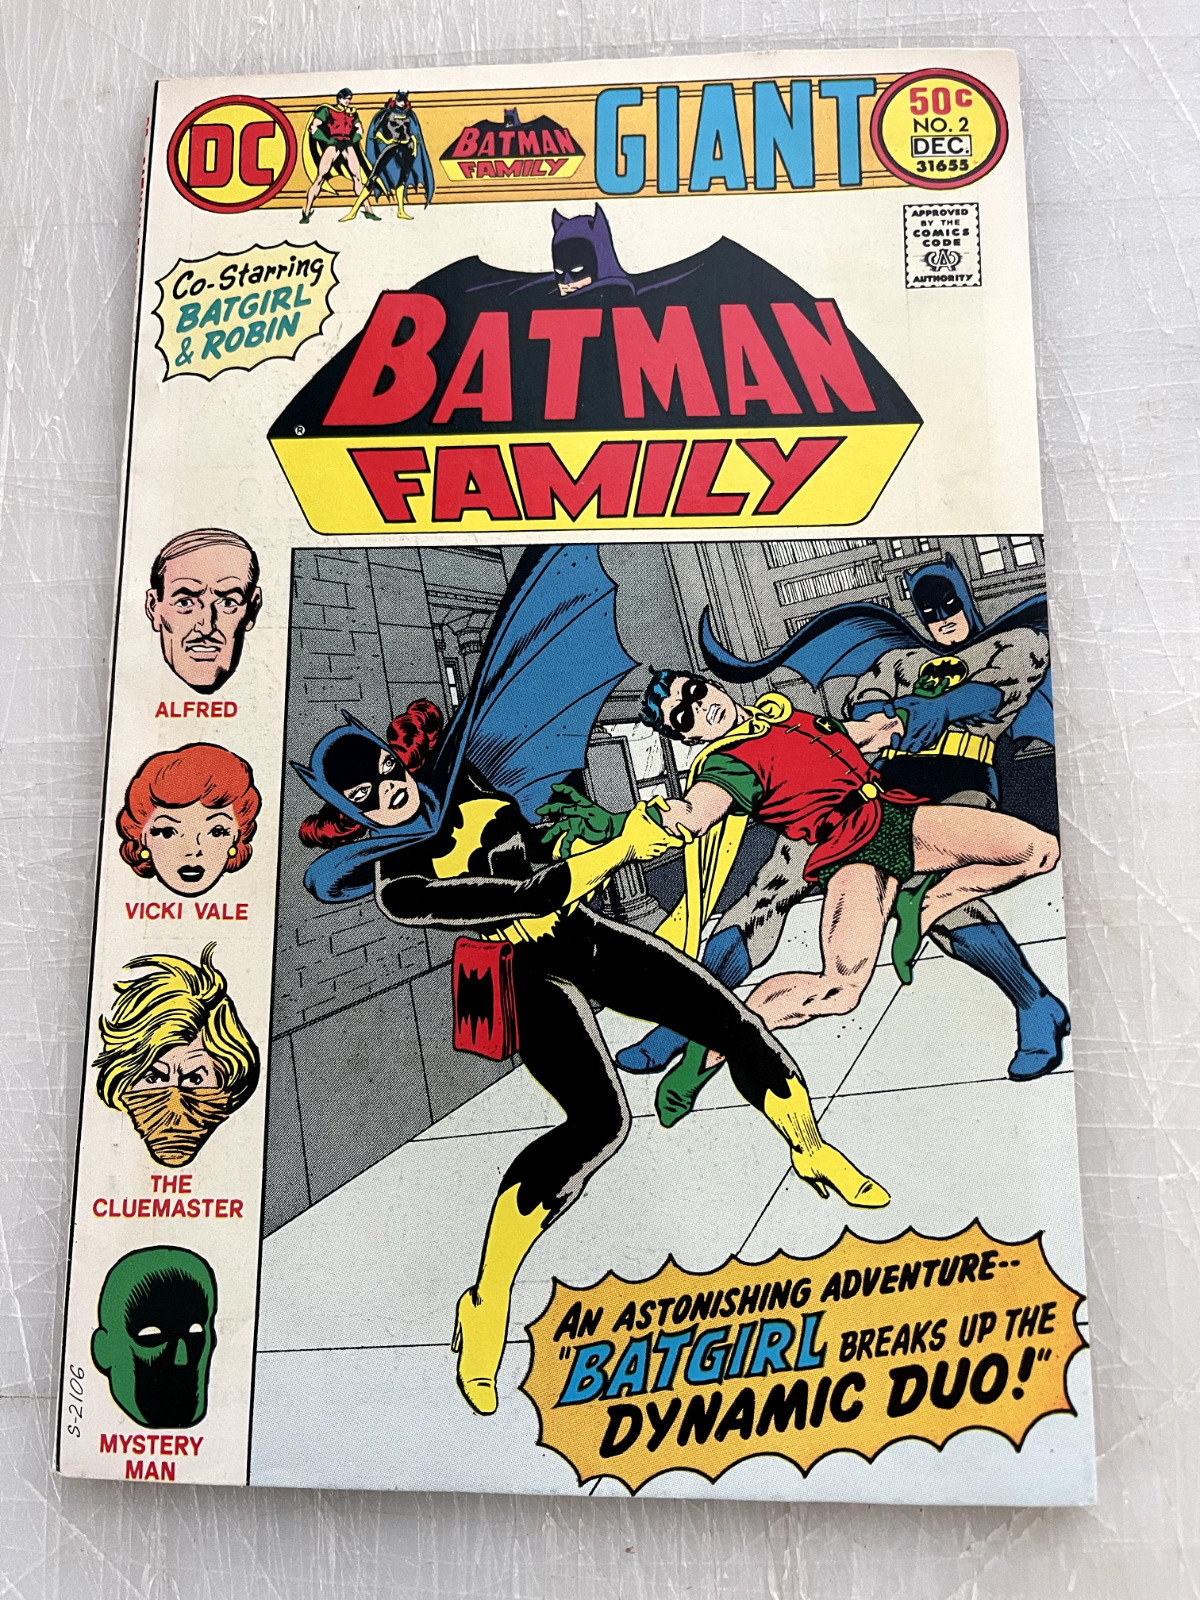 DC GIANT BATMAN FAMILY #2 BRONZE AGE DC COMICS 1975